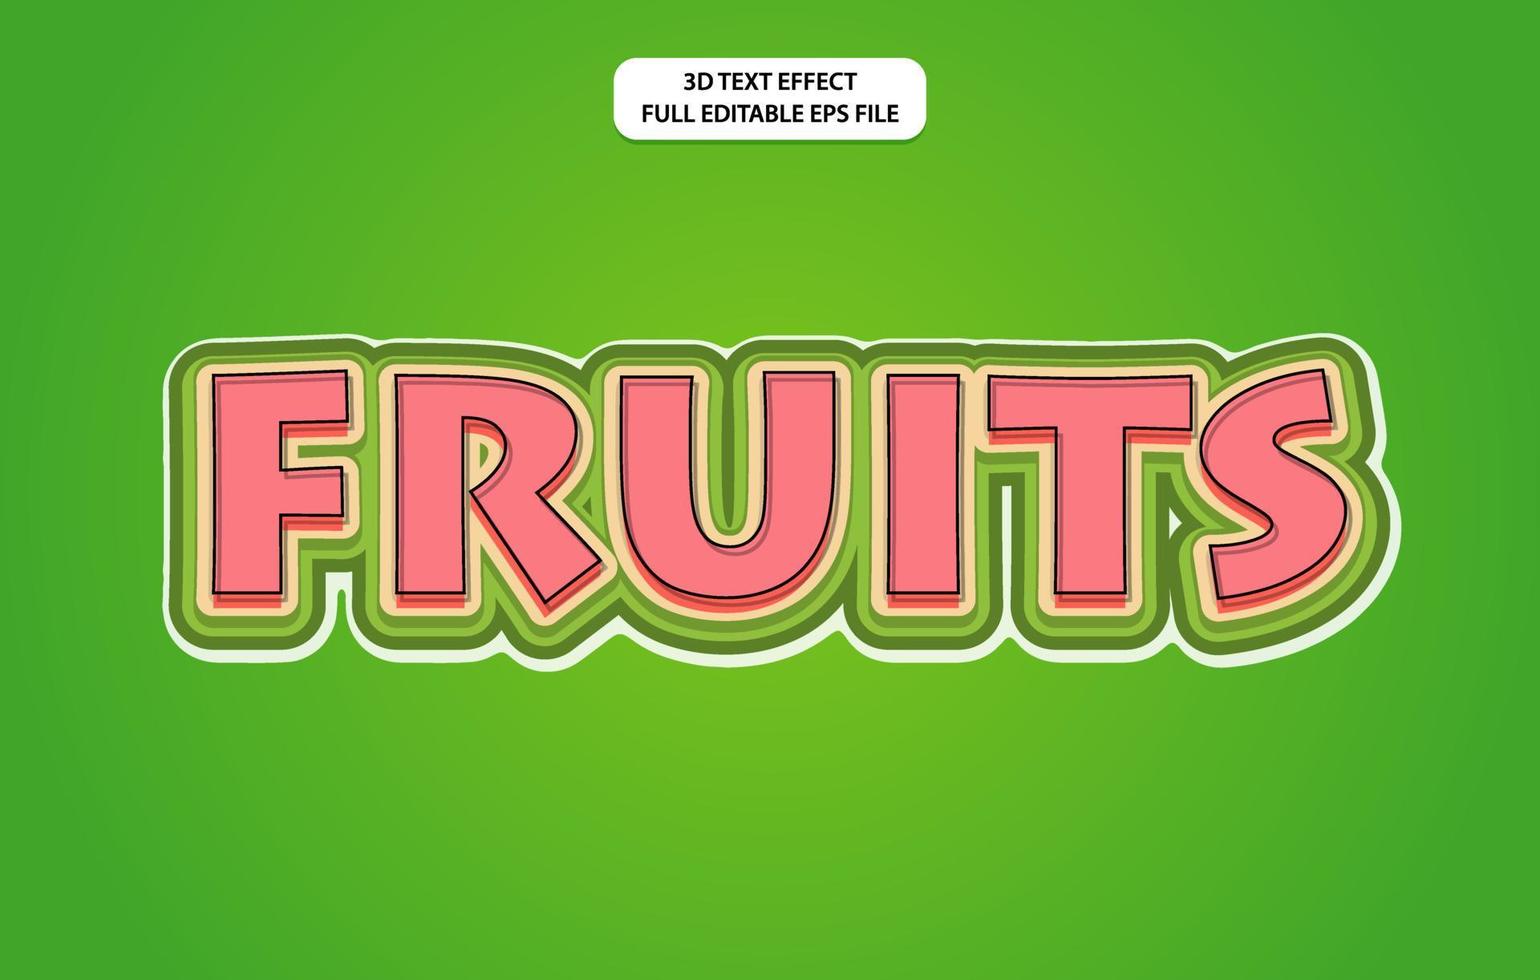 modelo de efeito de texto editável 3d de frutas, estilo de efeito de texto vetor